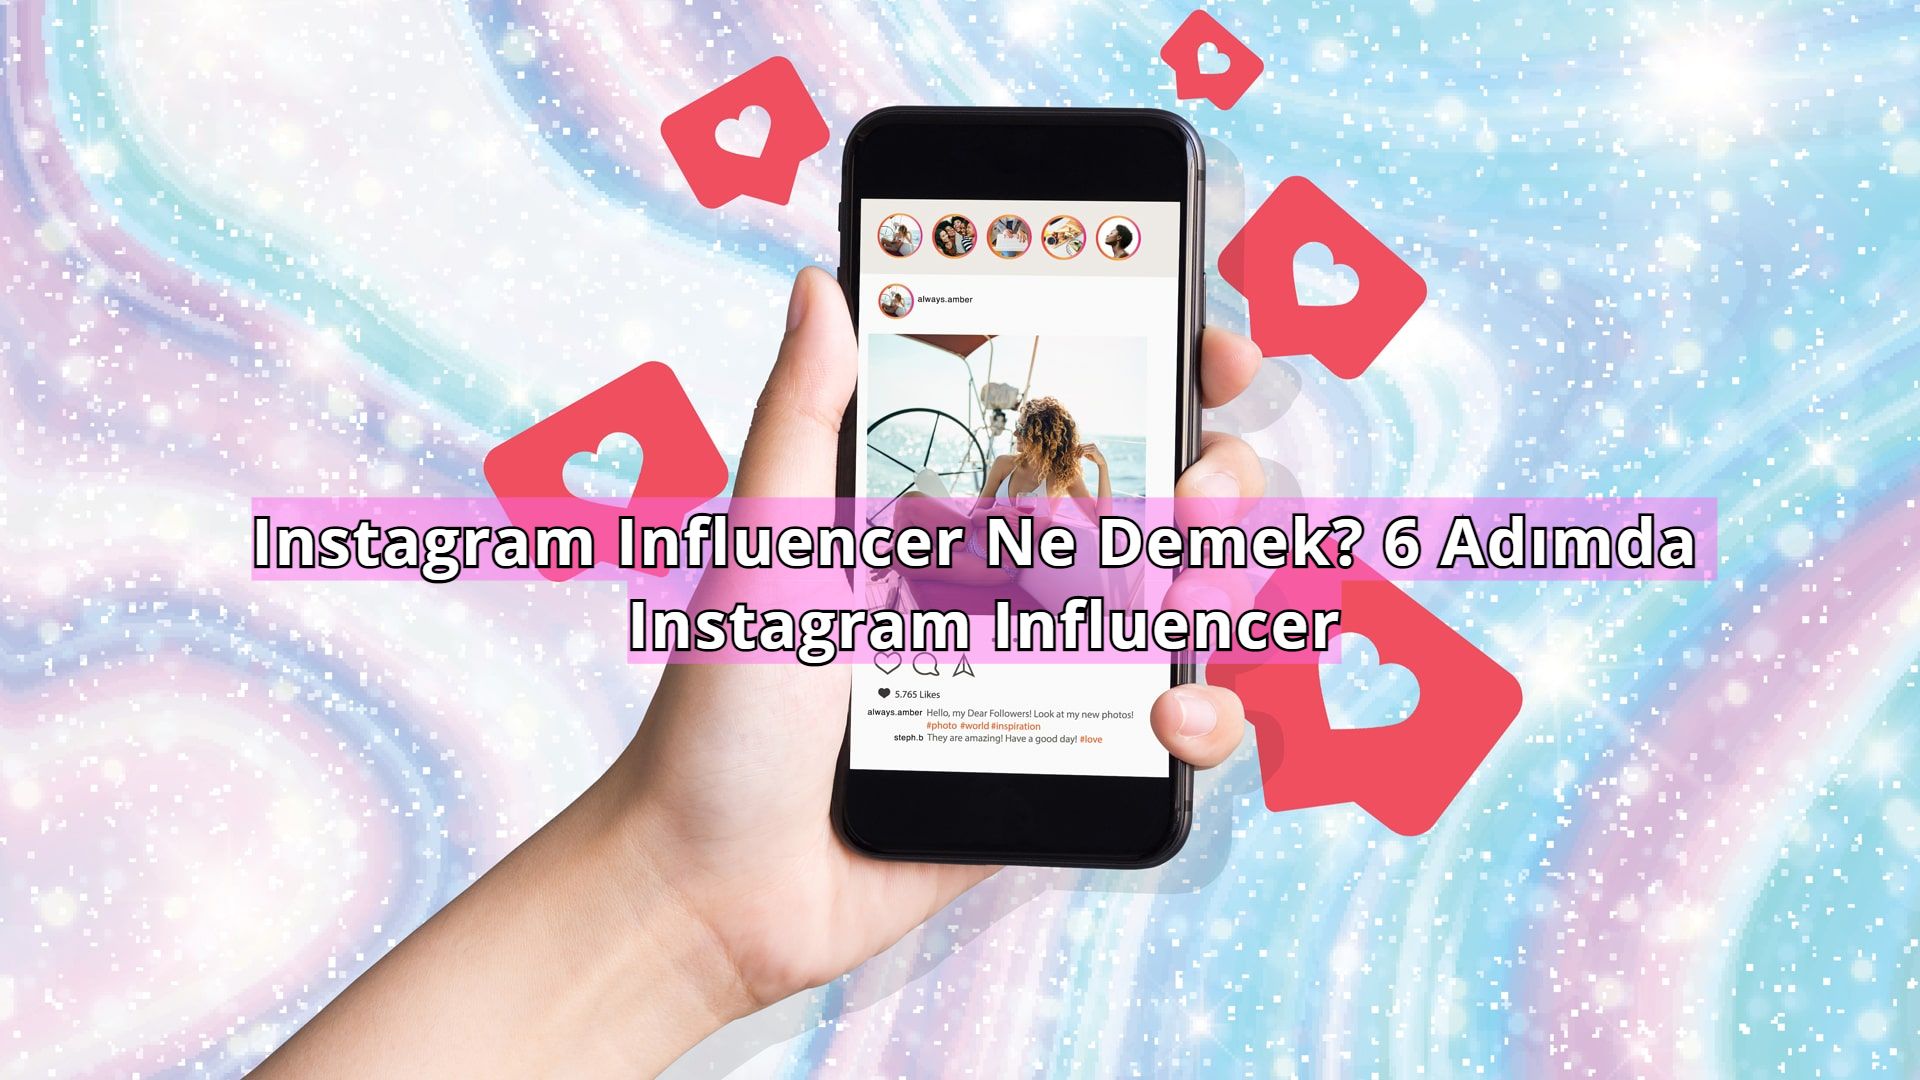 Instagram Influencer Ne Demek? 6 Adımda Instagram Influencer